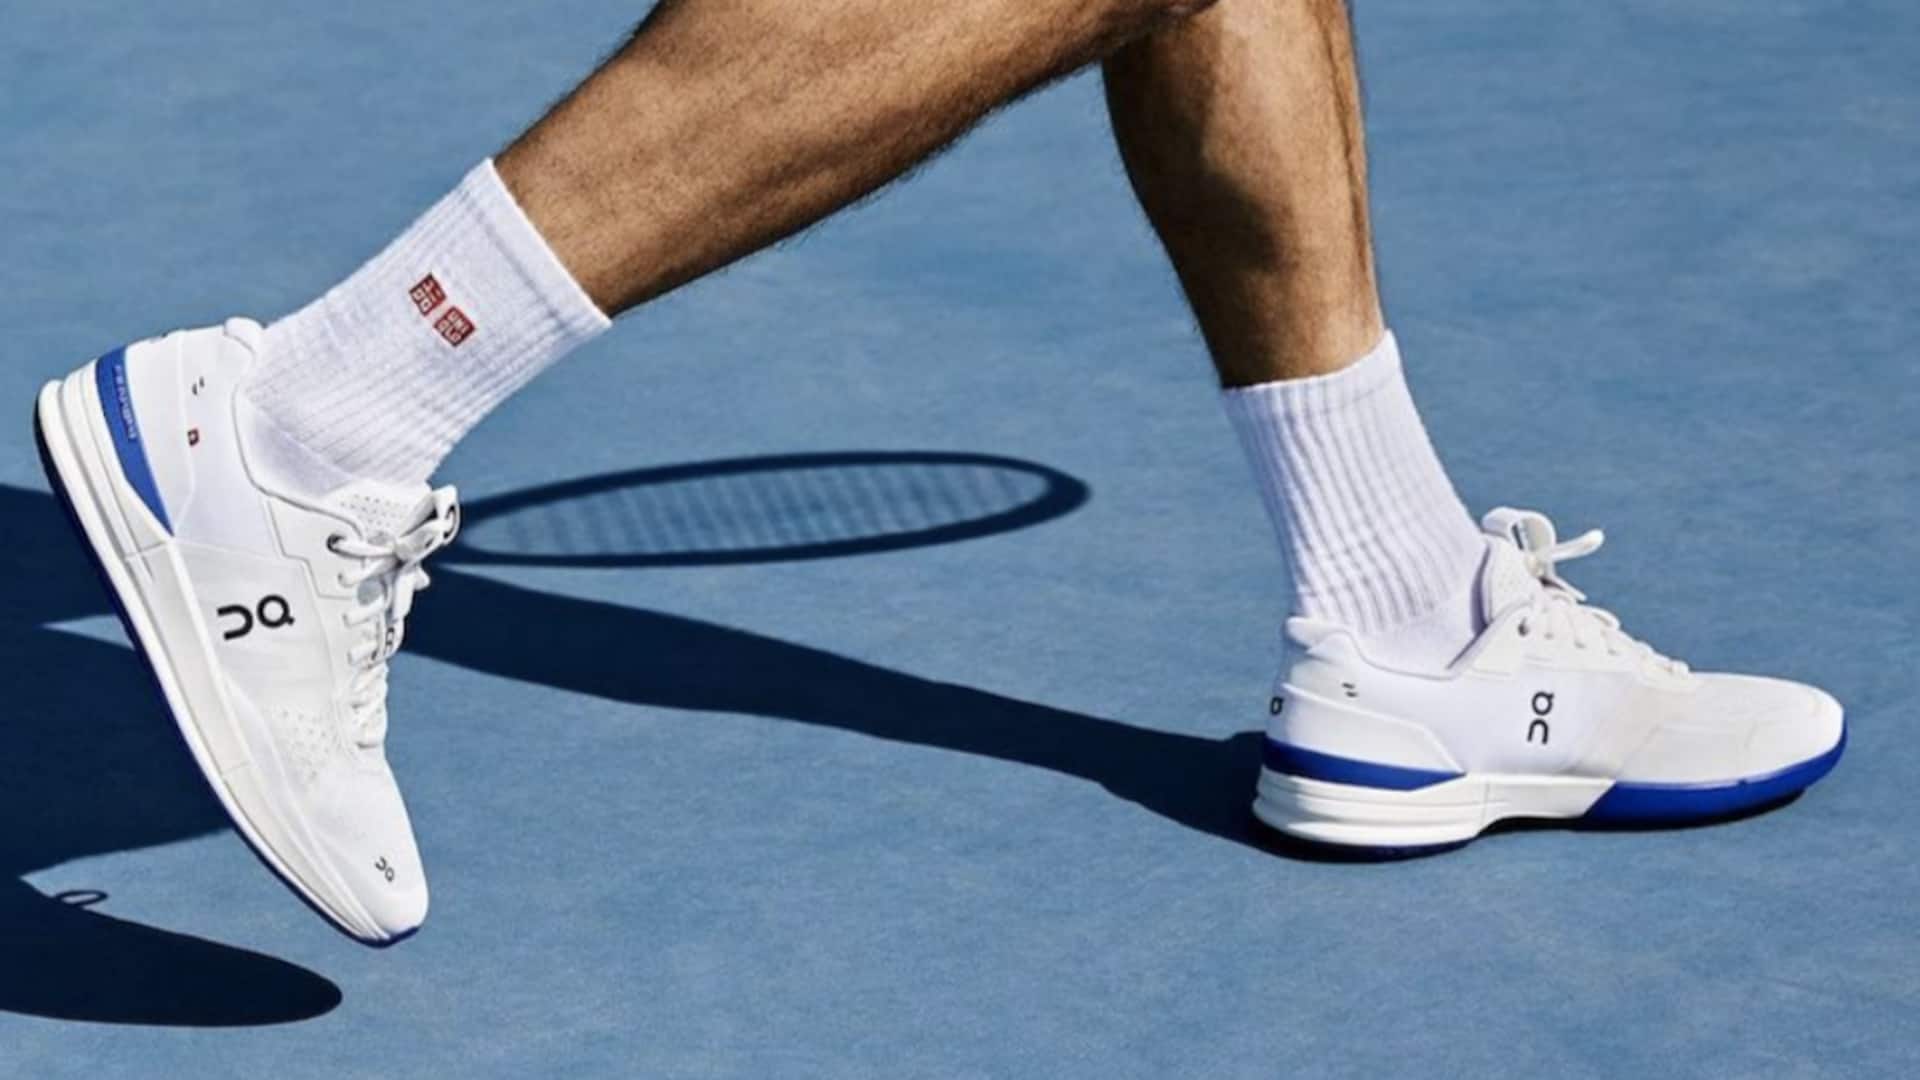 Roger Federer's Swiss shoe brand 'On' under scanner: Here's why